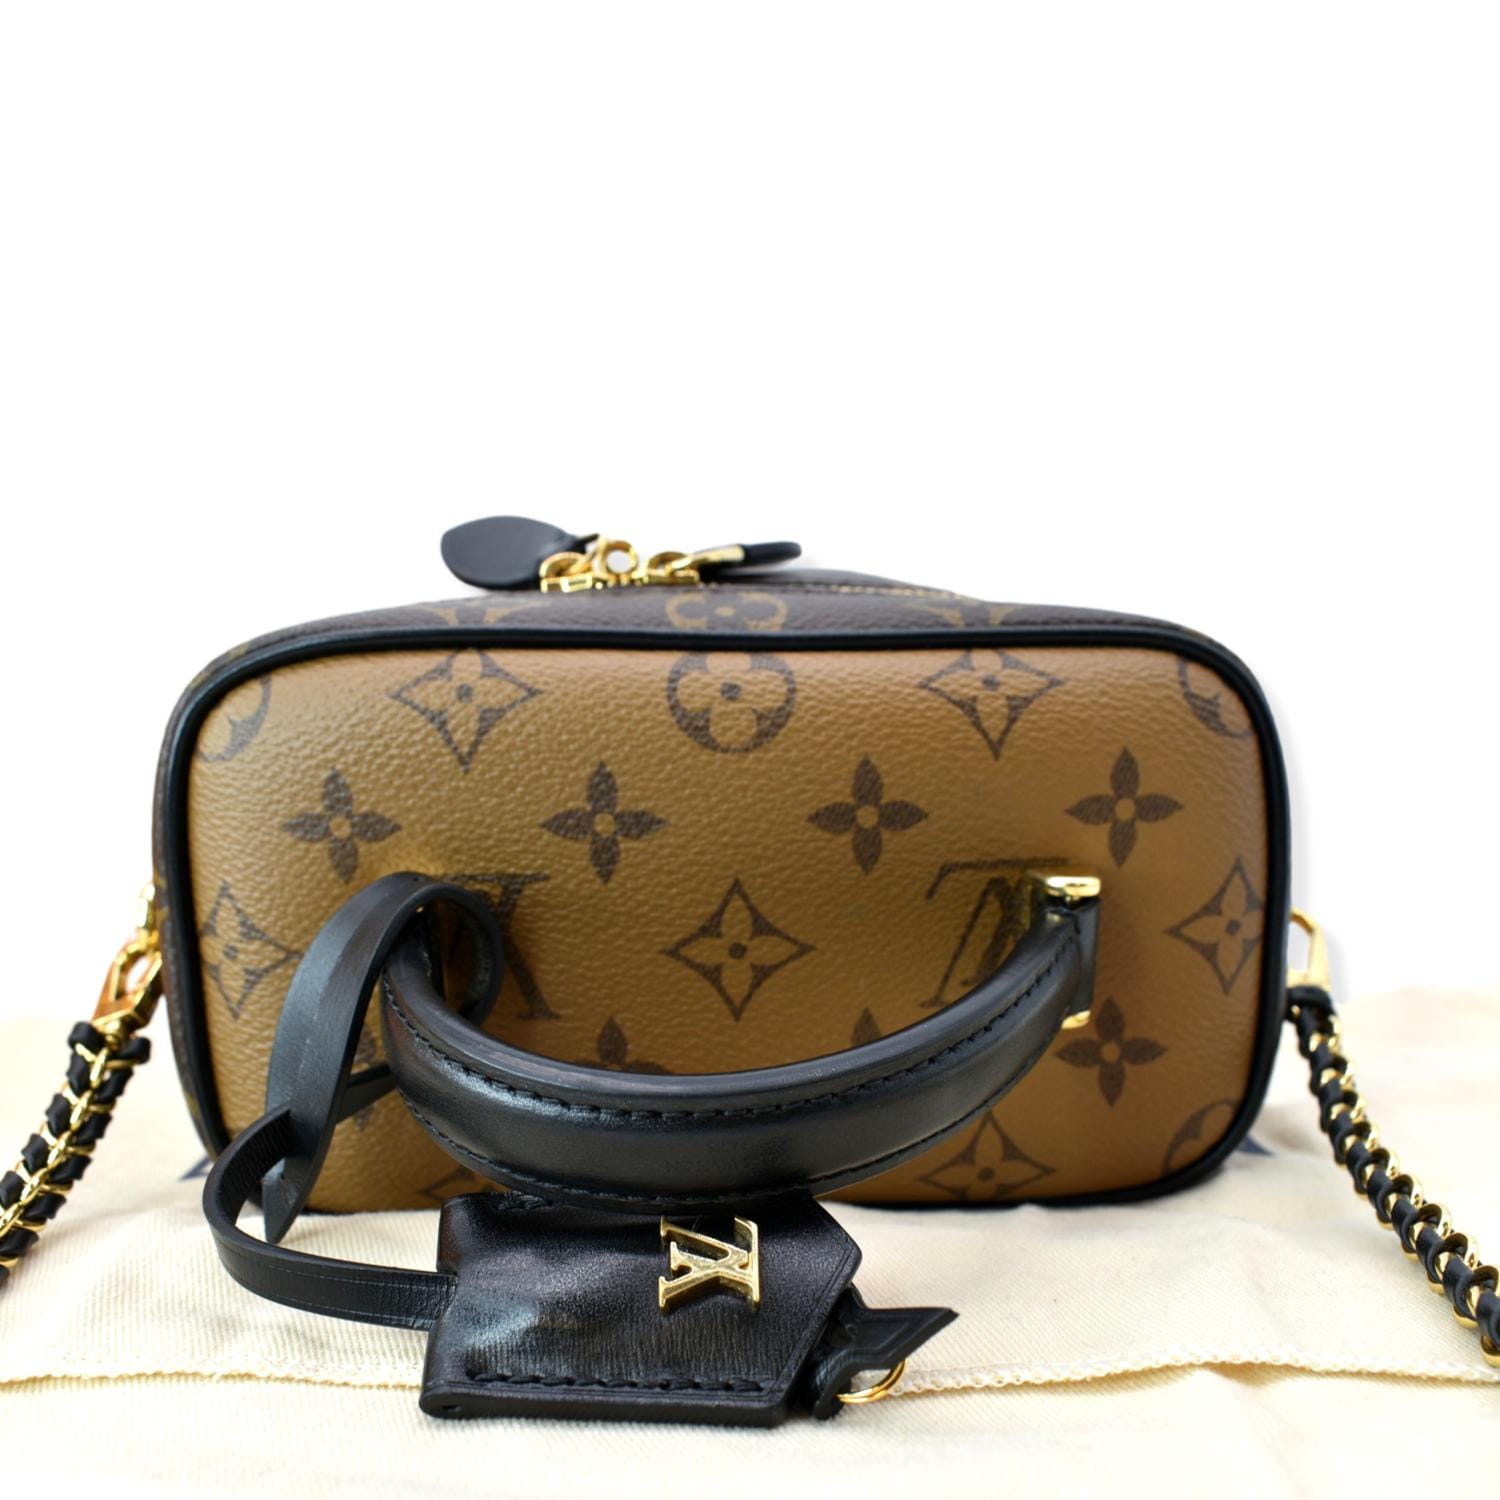 Louis Vuitton Camera Box Handbag Studded Reverse Monogram Canvas Brown  437882